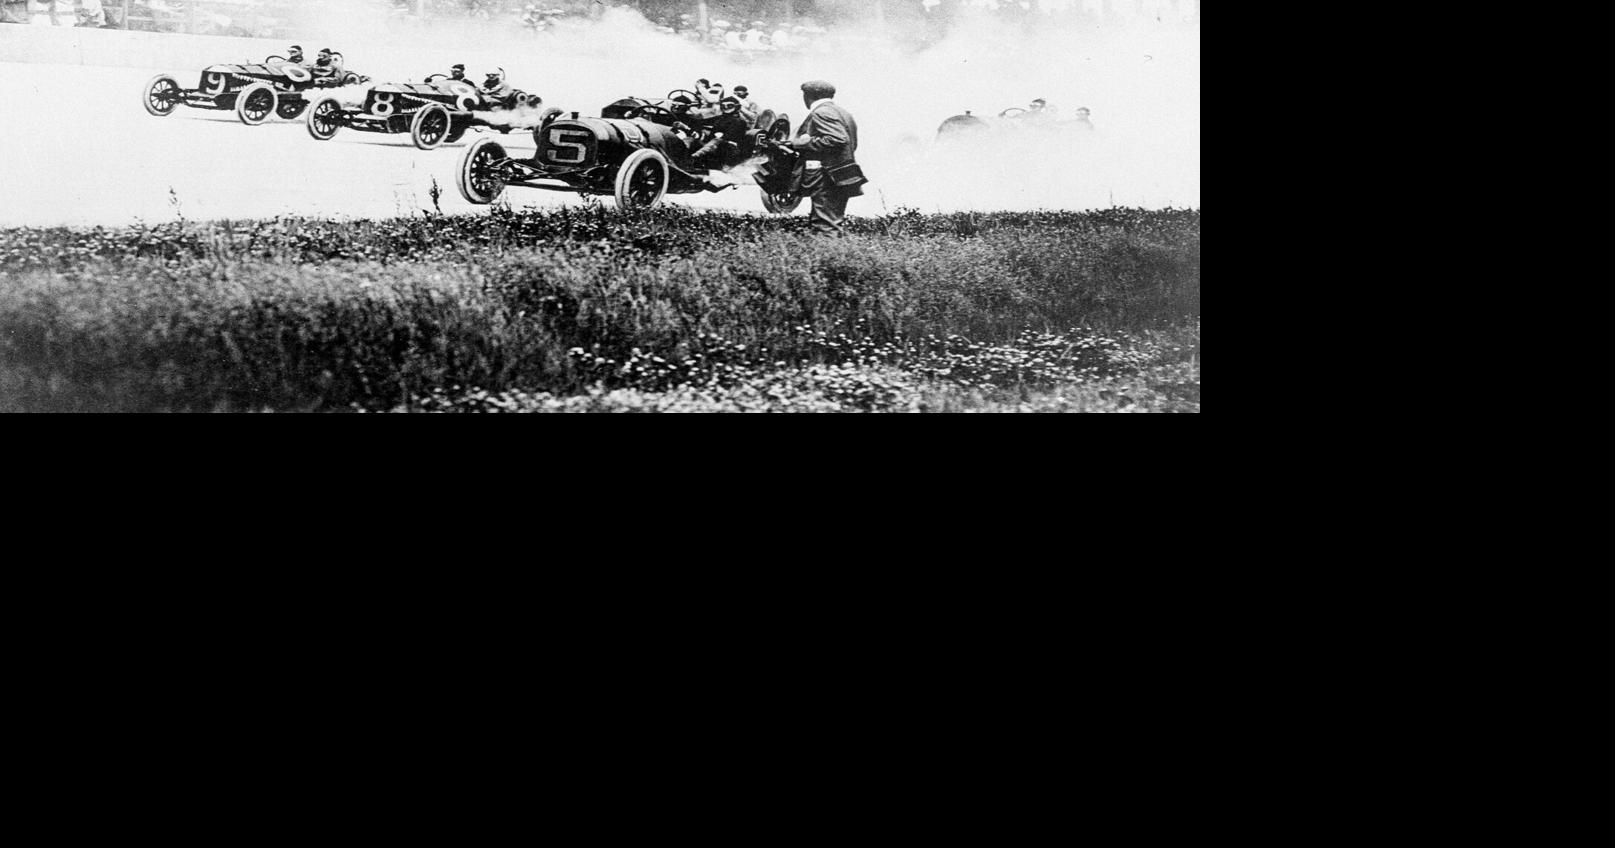 1909: Indianapolis Motor Speedway